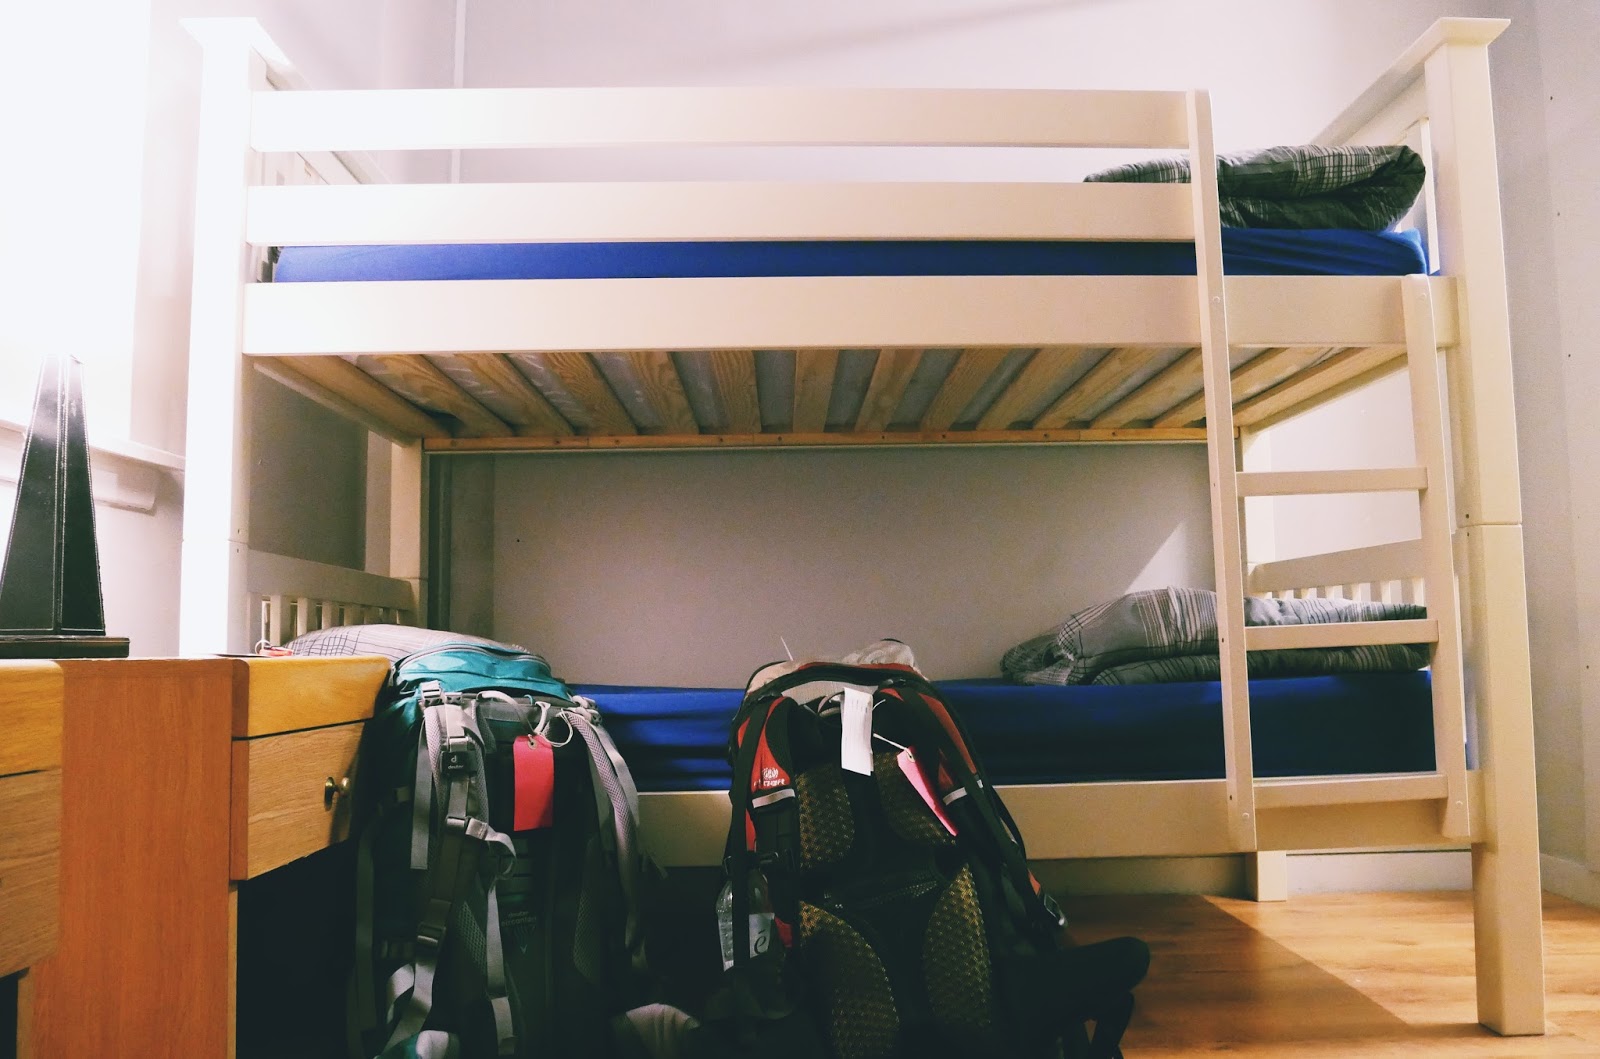 5 Hal yang Kamu Dapatkan ketika Menginap di Dormitory